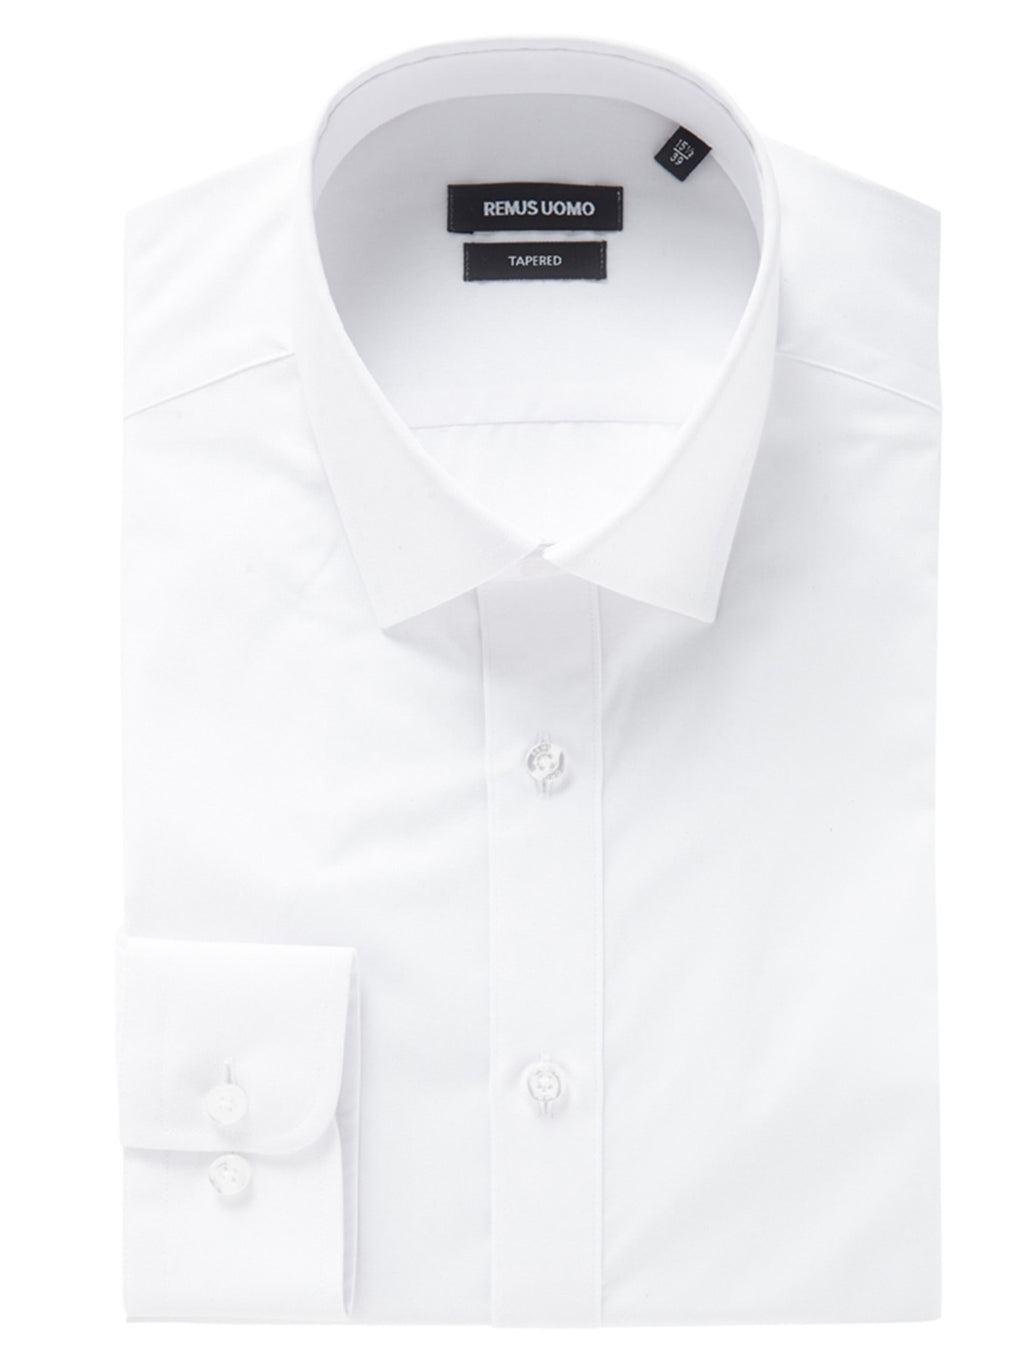 mens formal shirts white